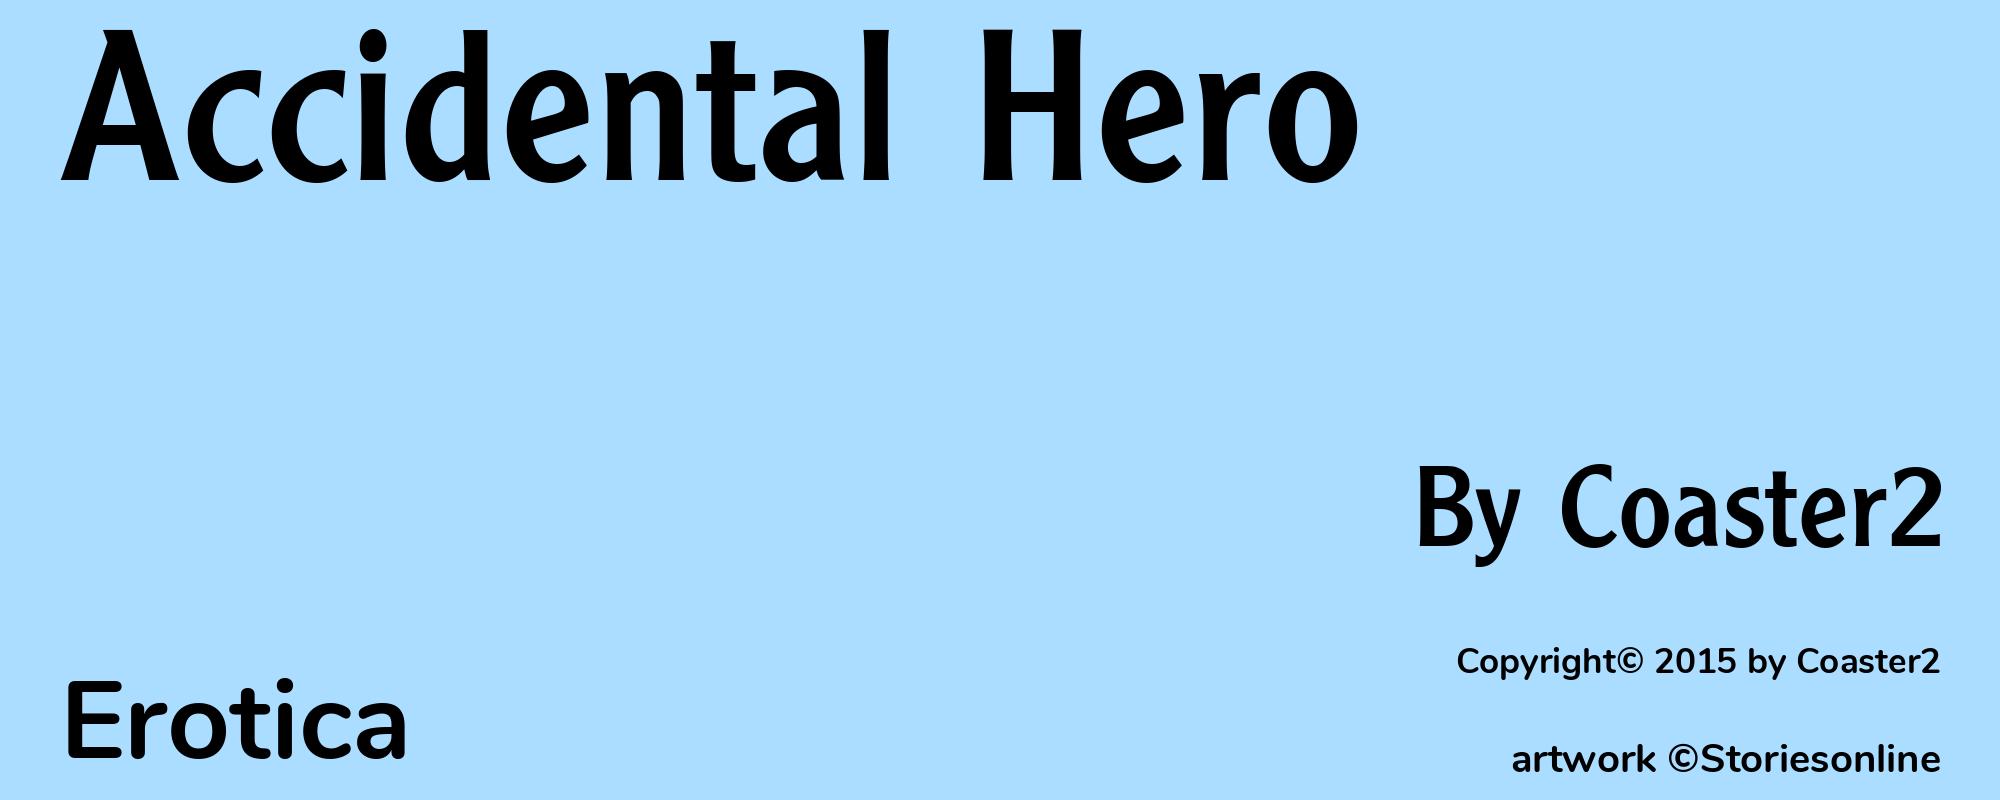 Accidental Hero  - Cover